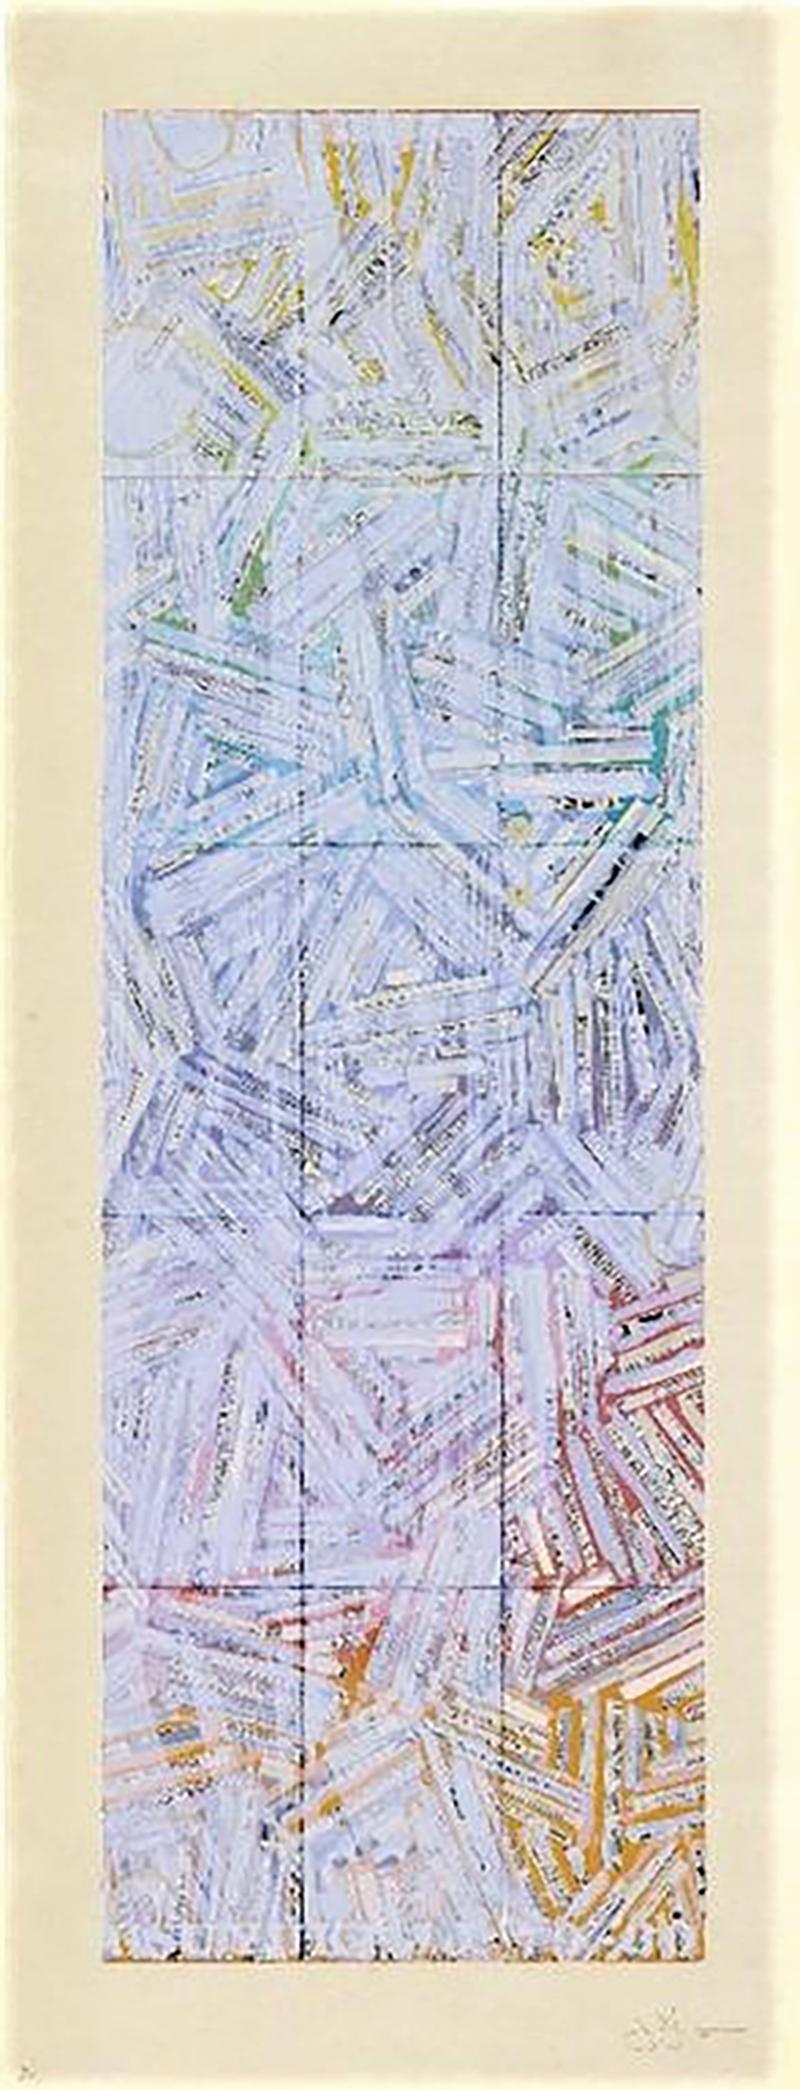 Usuyuki - Print by Jasper Johns